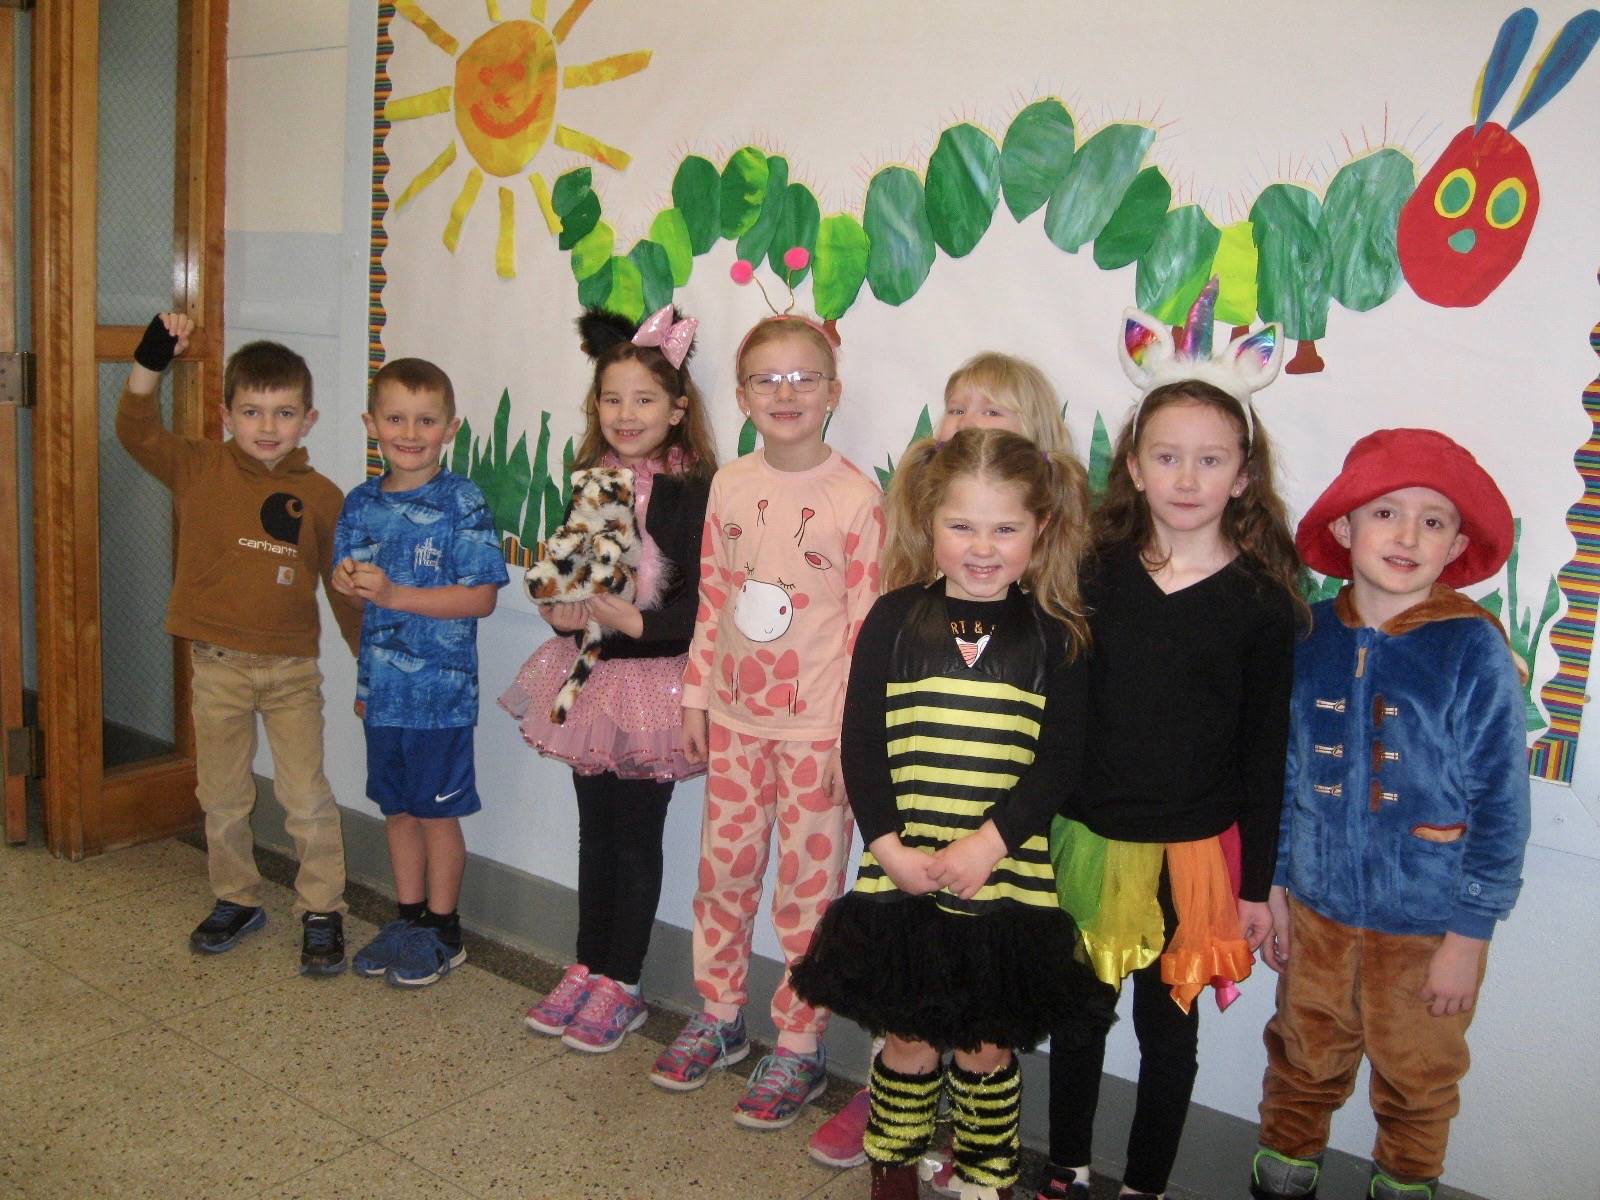 8 students dressed like their favorite animal.